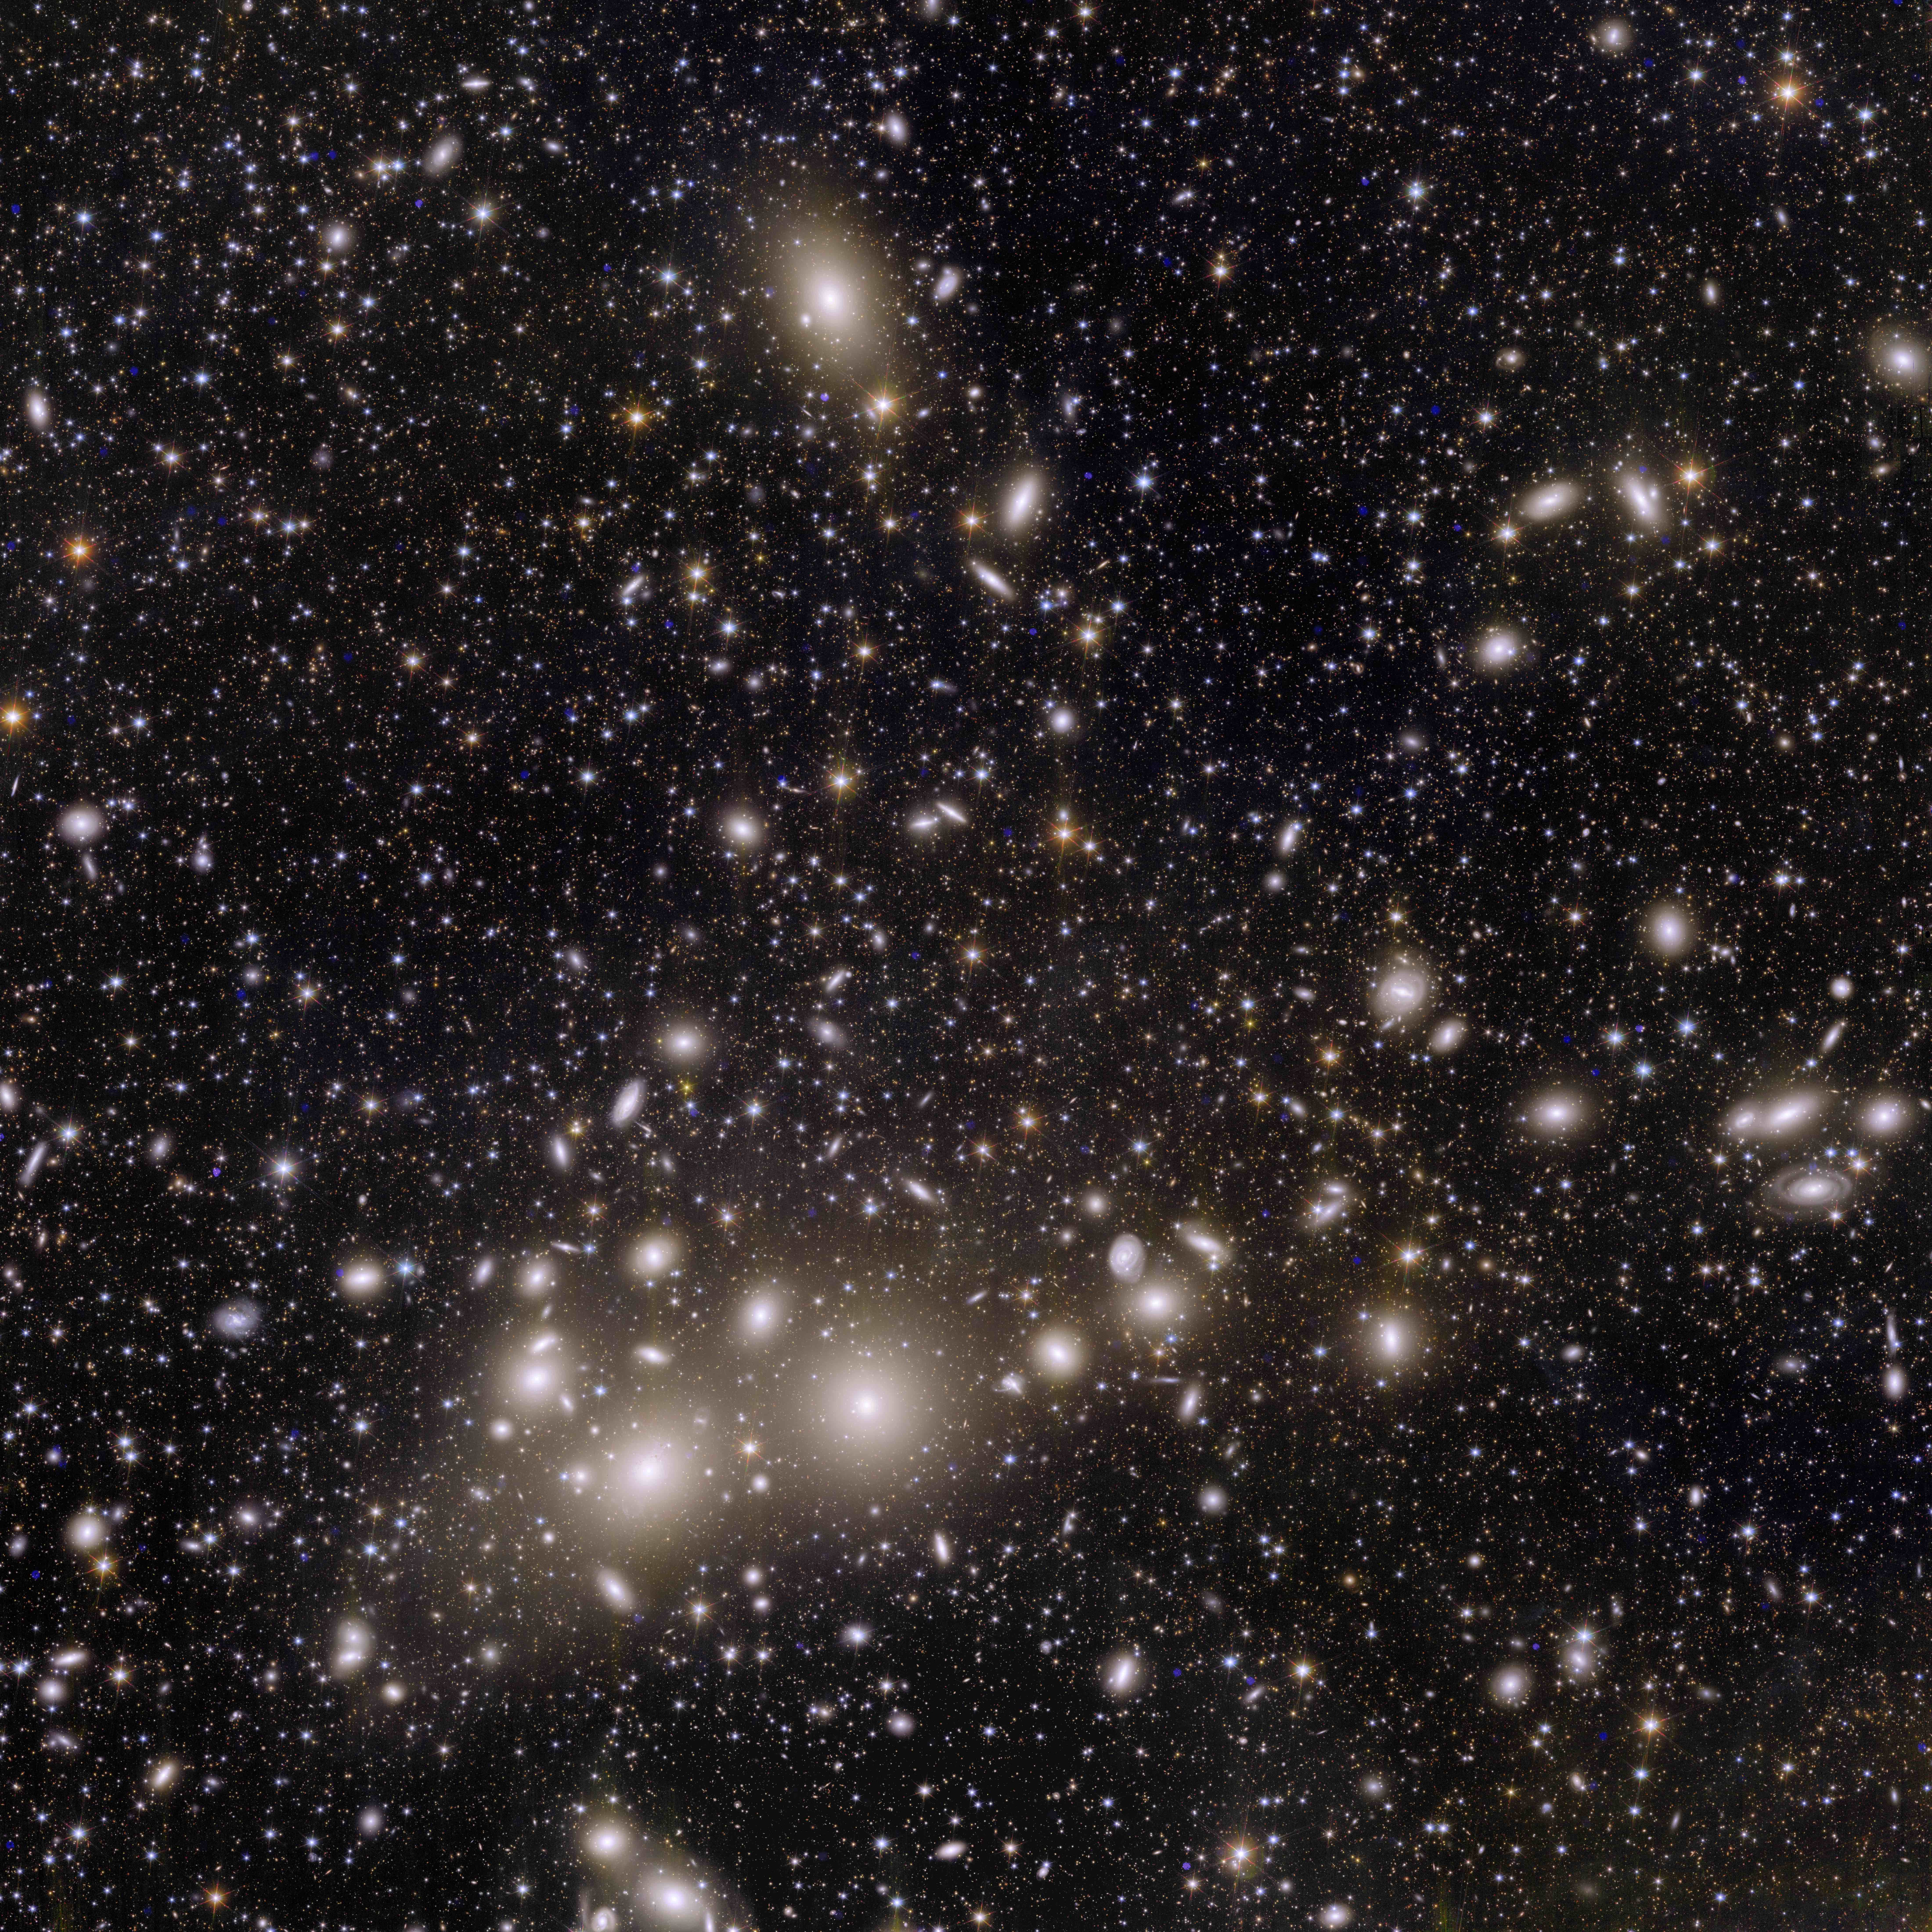 ESA اولین تصاویر خیره کننده از اقلیدس، “کارآگاه جهان تاریک” خود منتشر کرد.